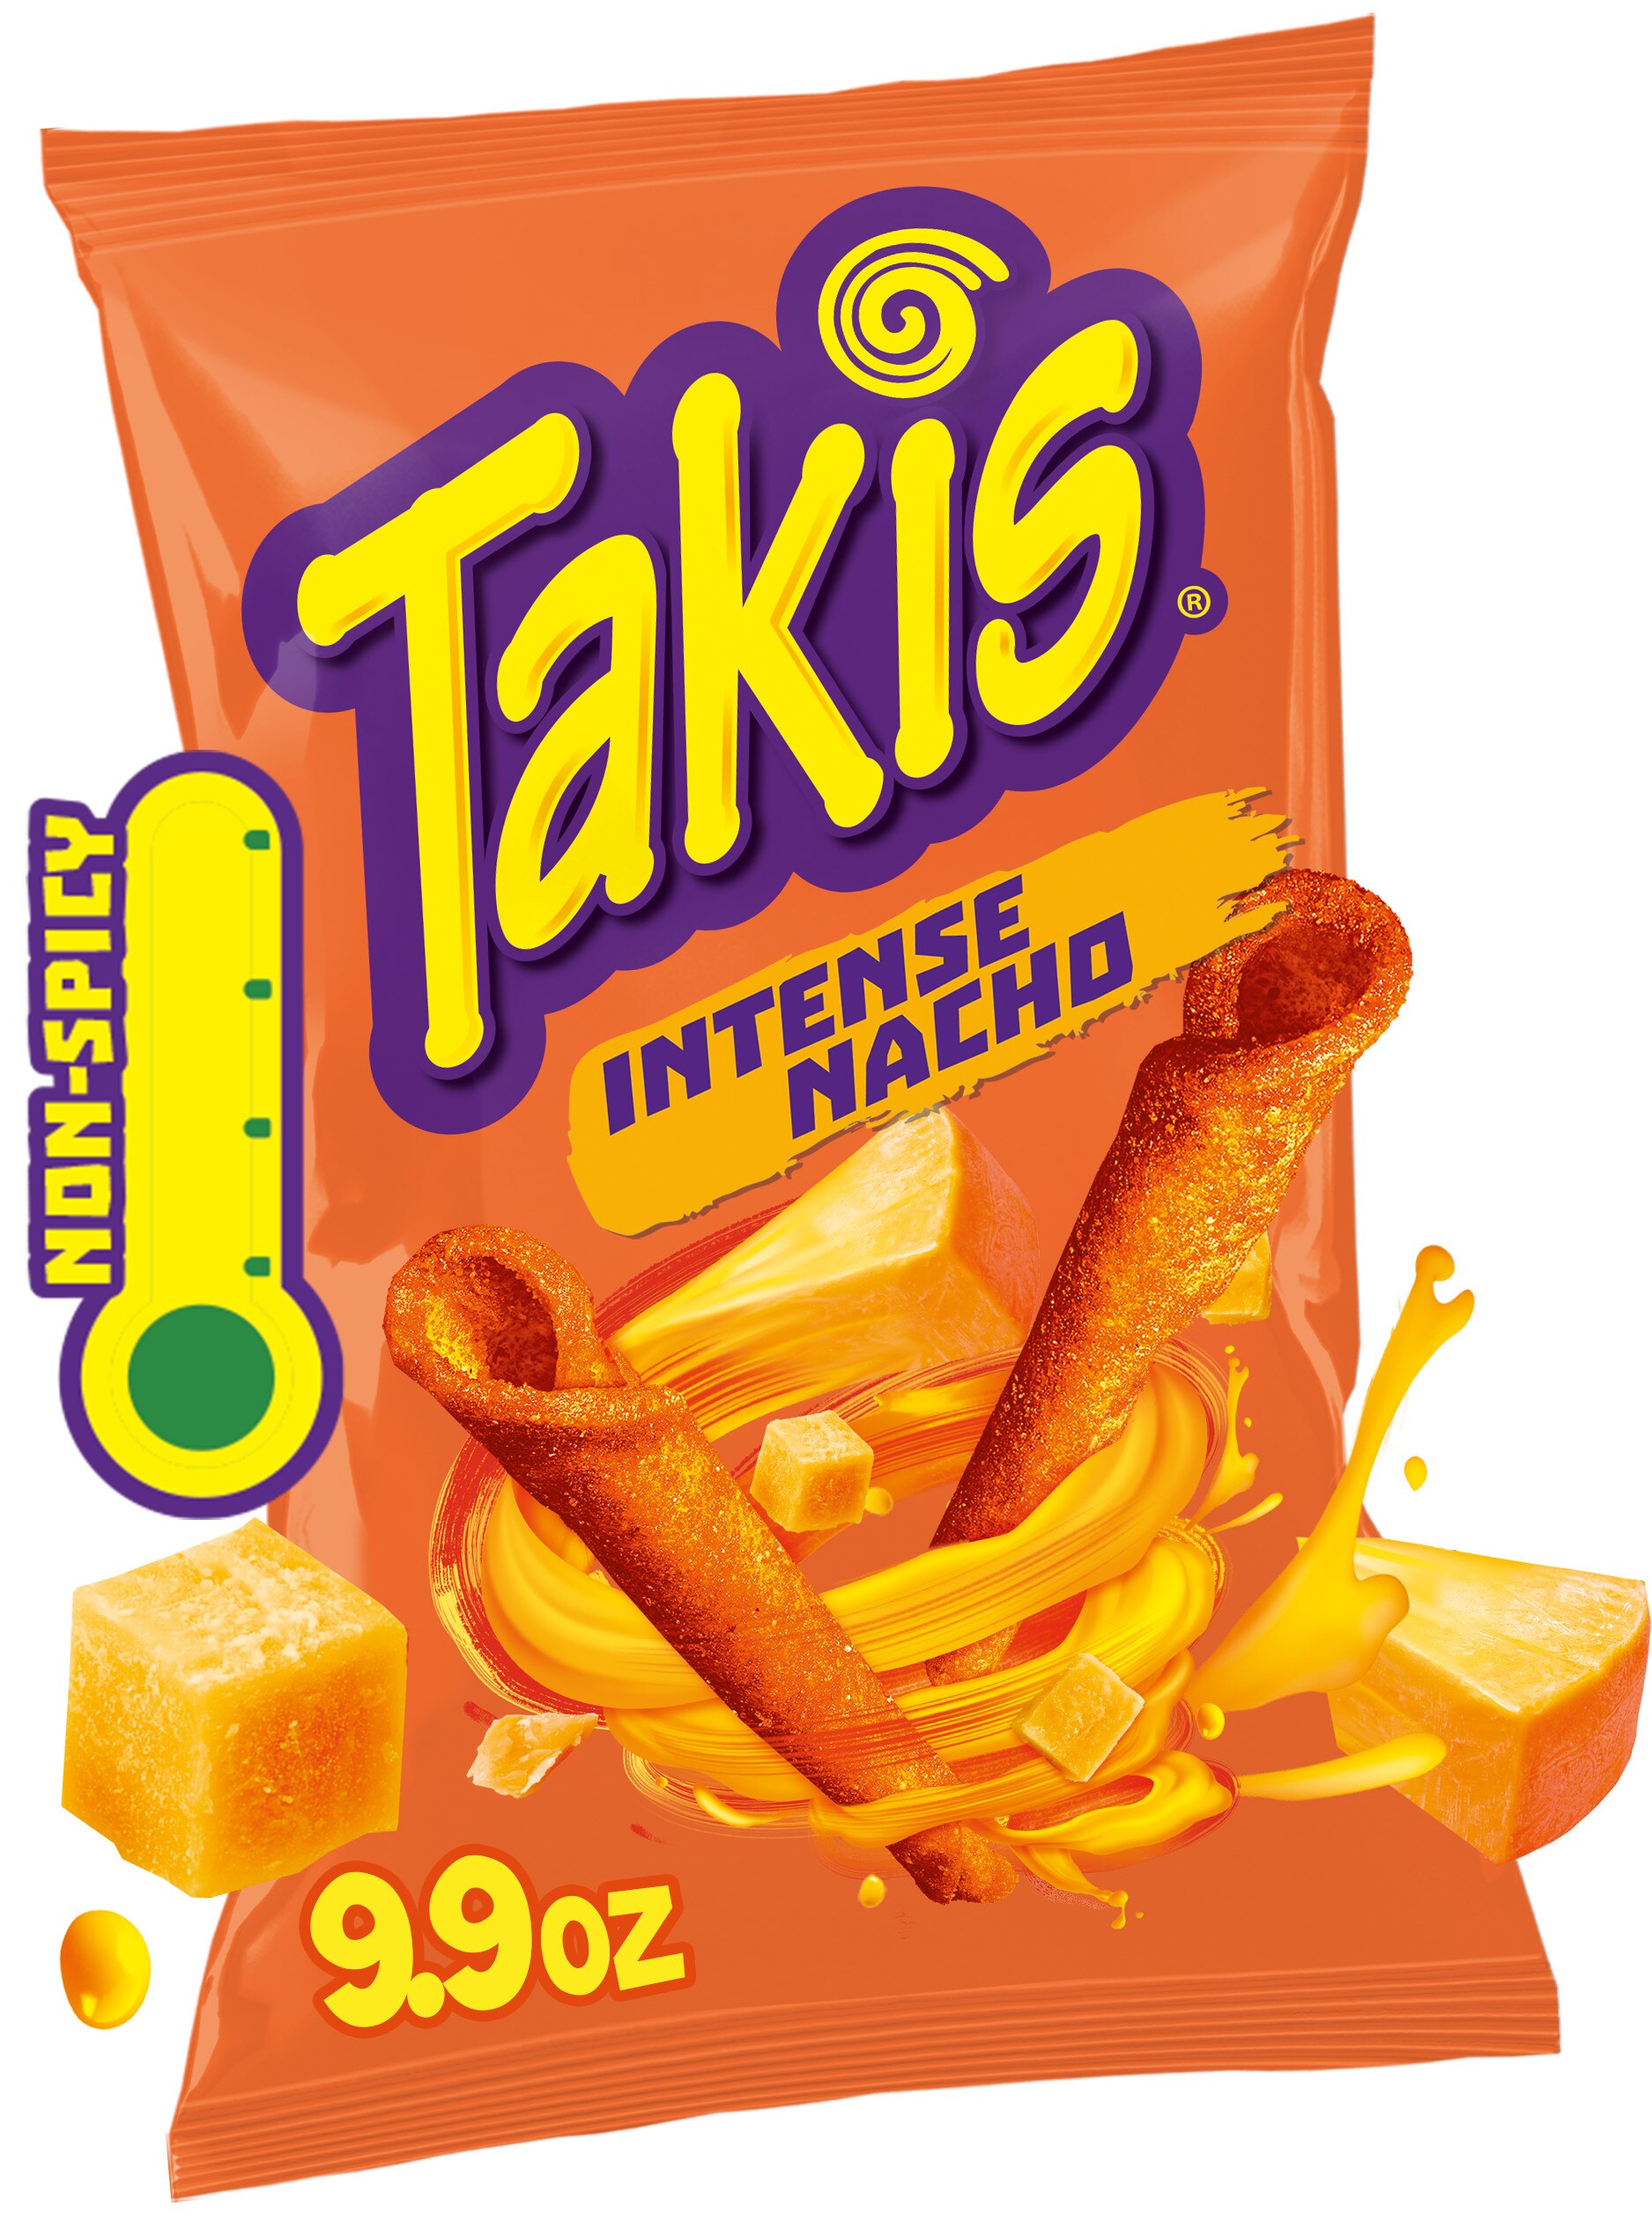 Takis Intense Nacho Rolls Nacho Cheese Flavored Cheesy Tortilla Chips, 9.9 oz